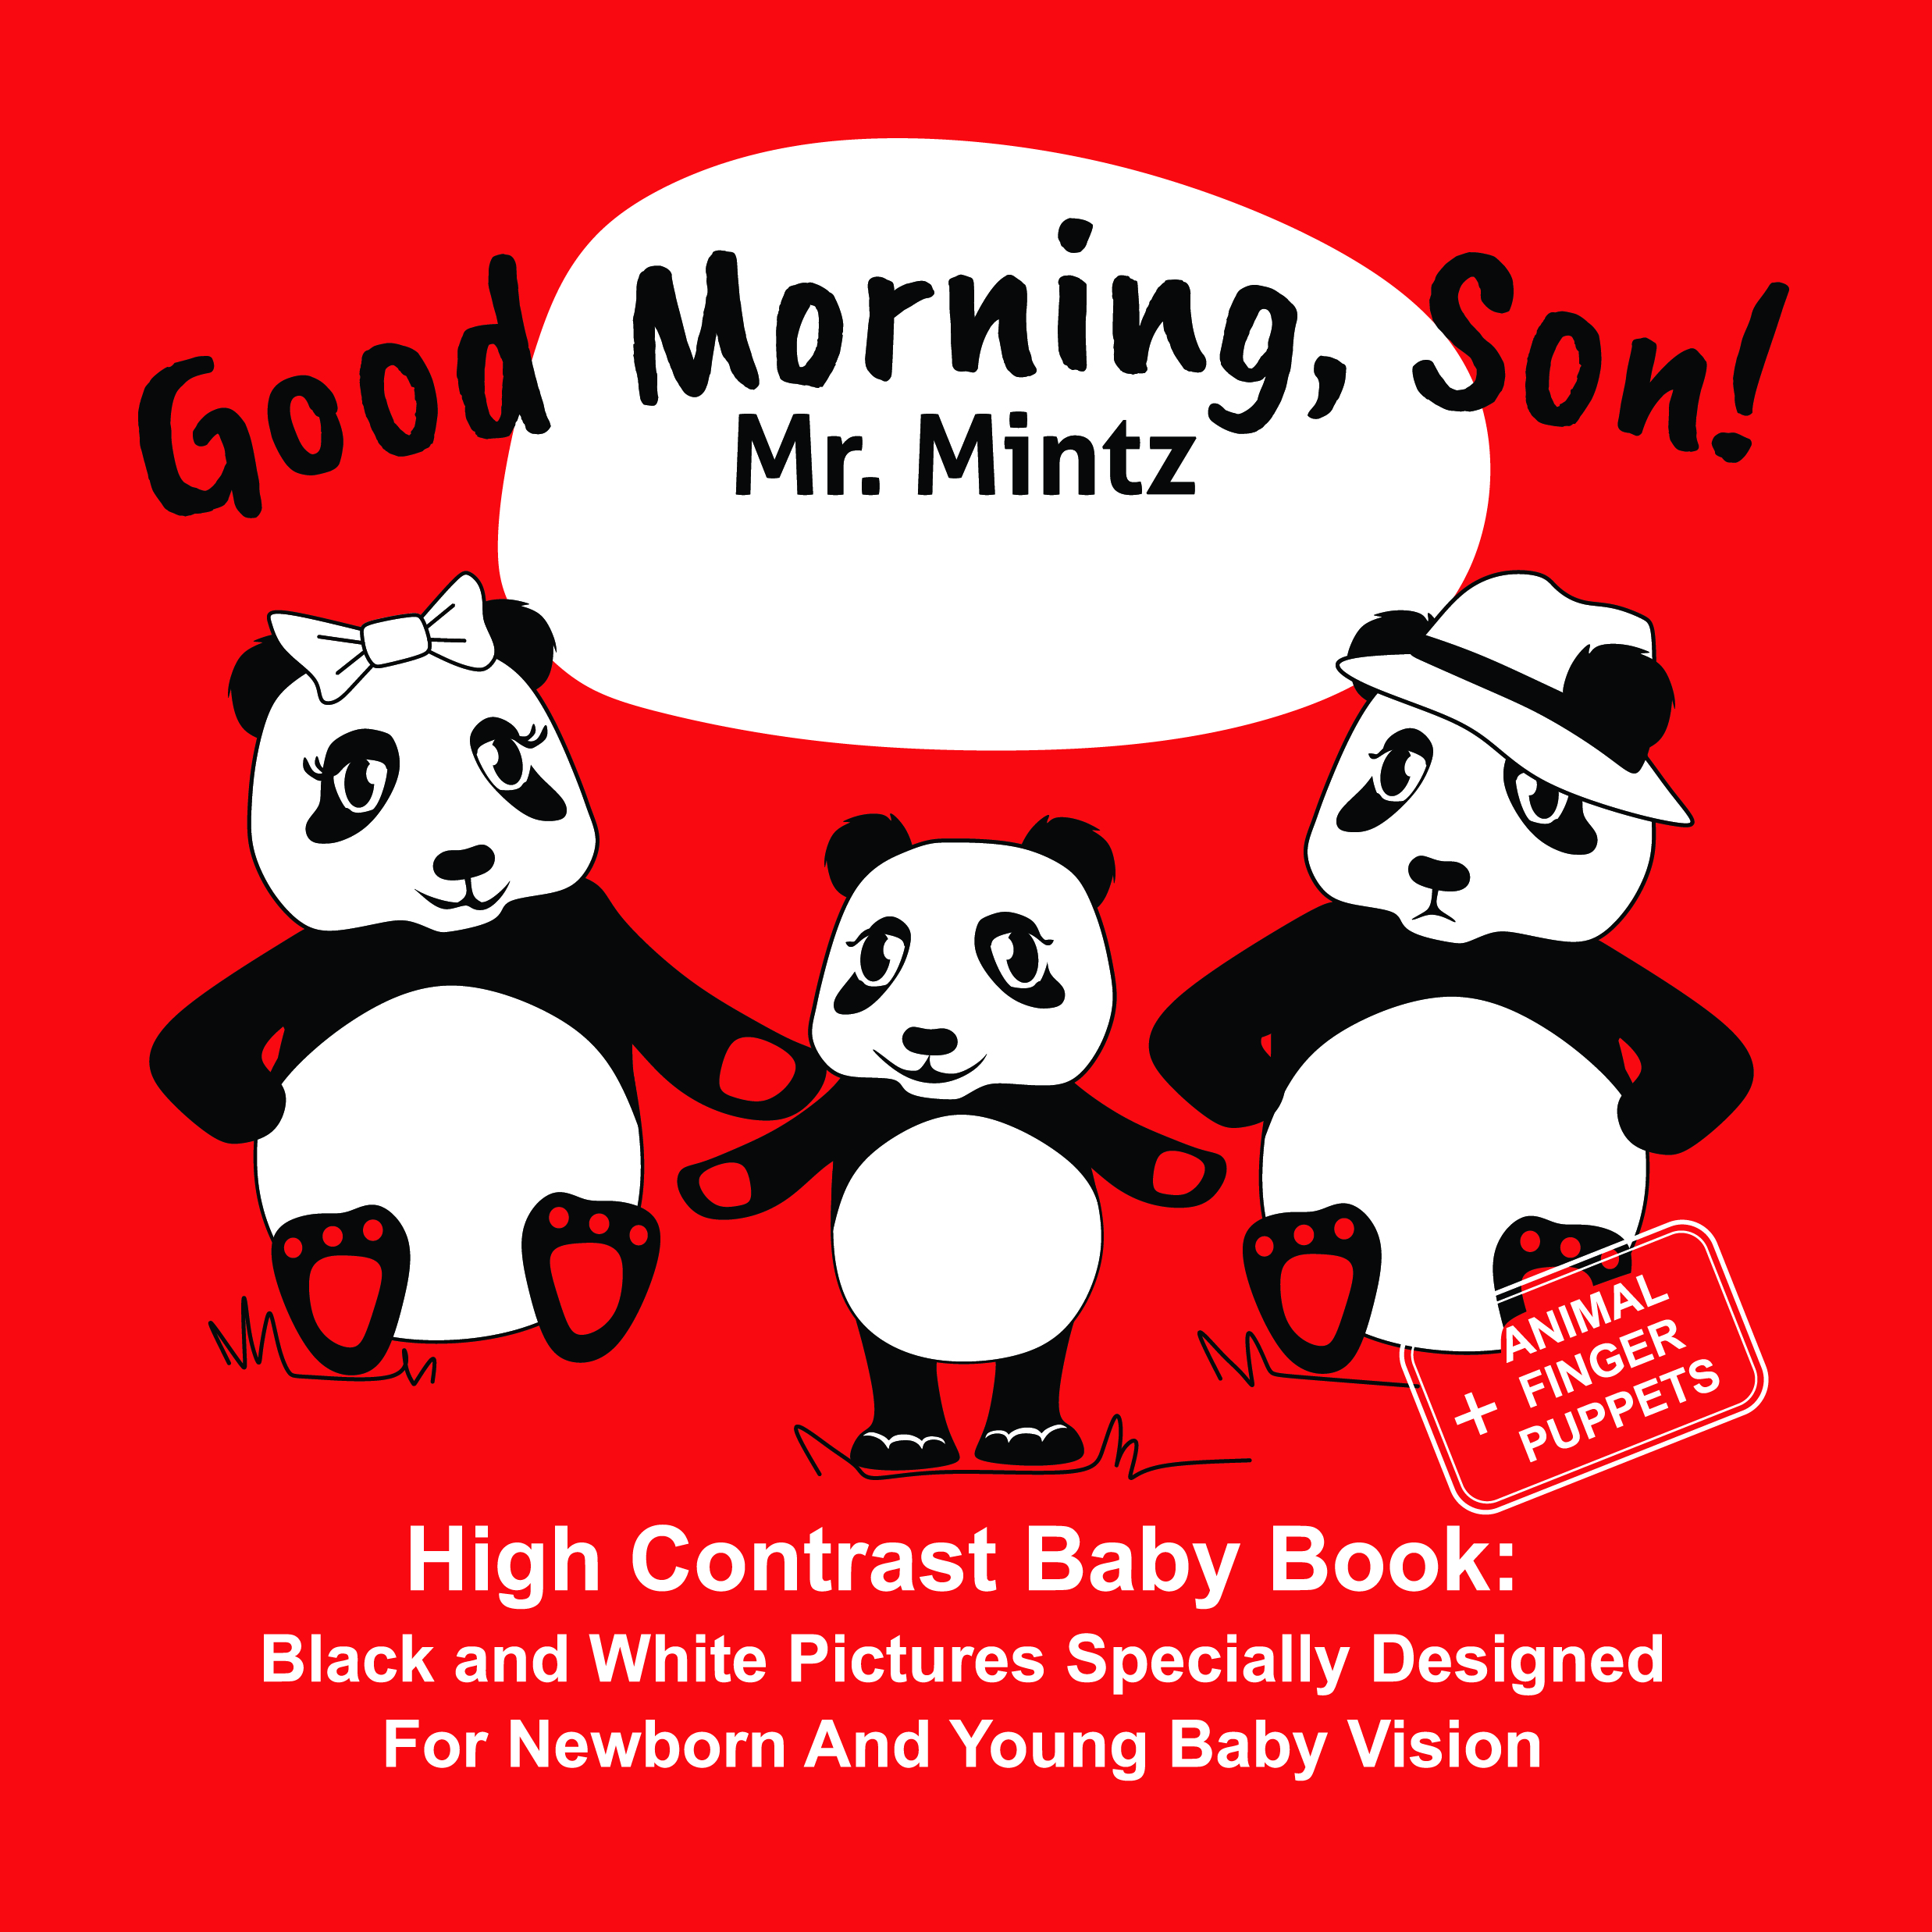 FREE: Good Morning, Son! by Mr. Mintz